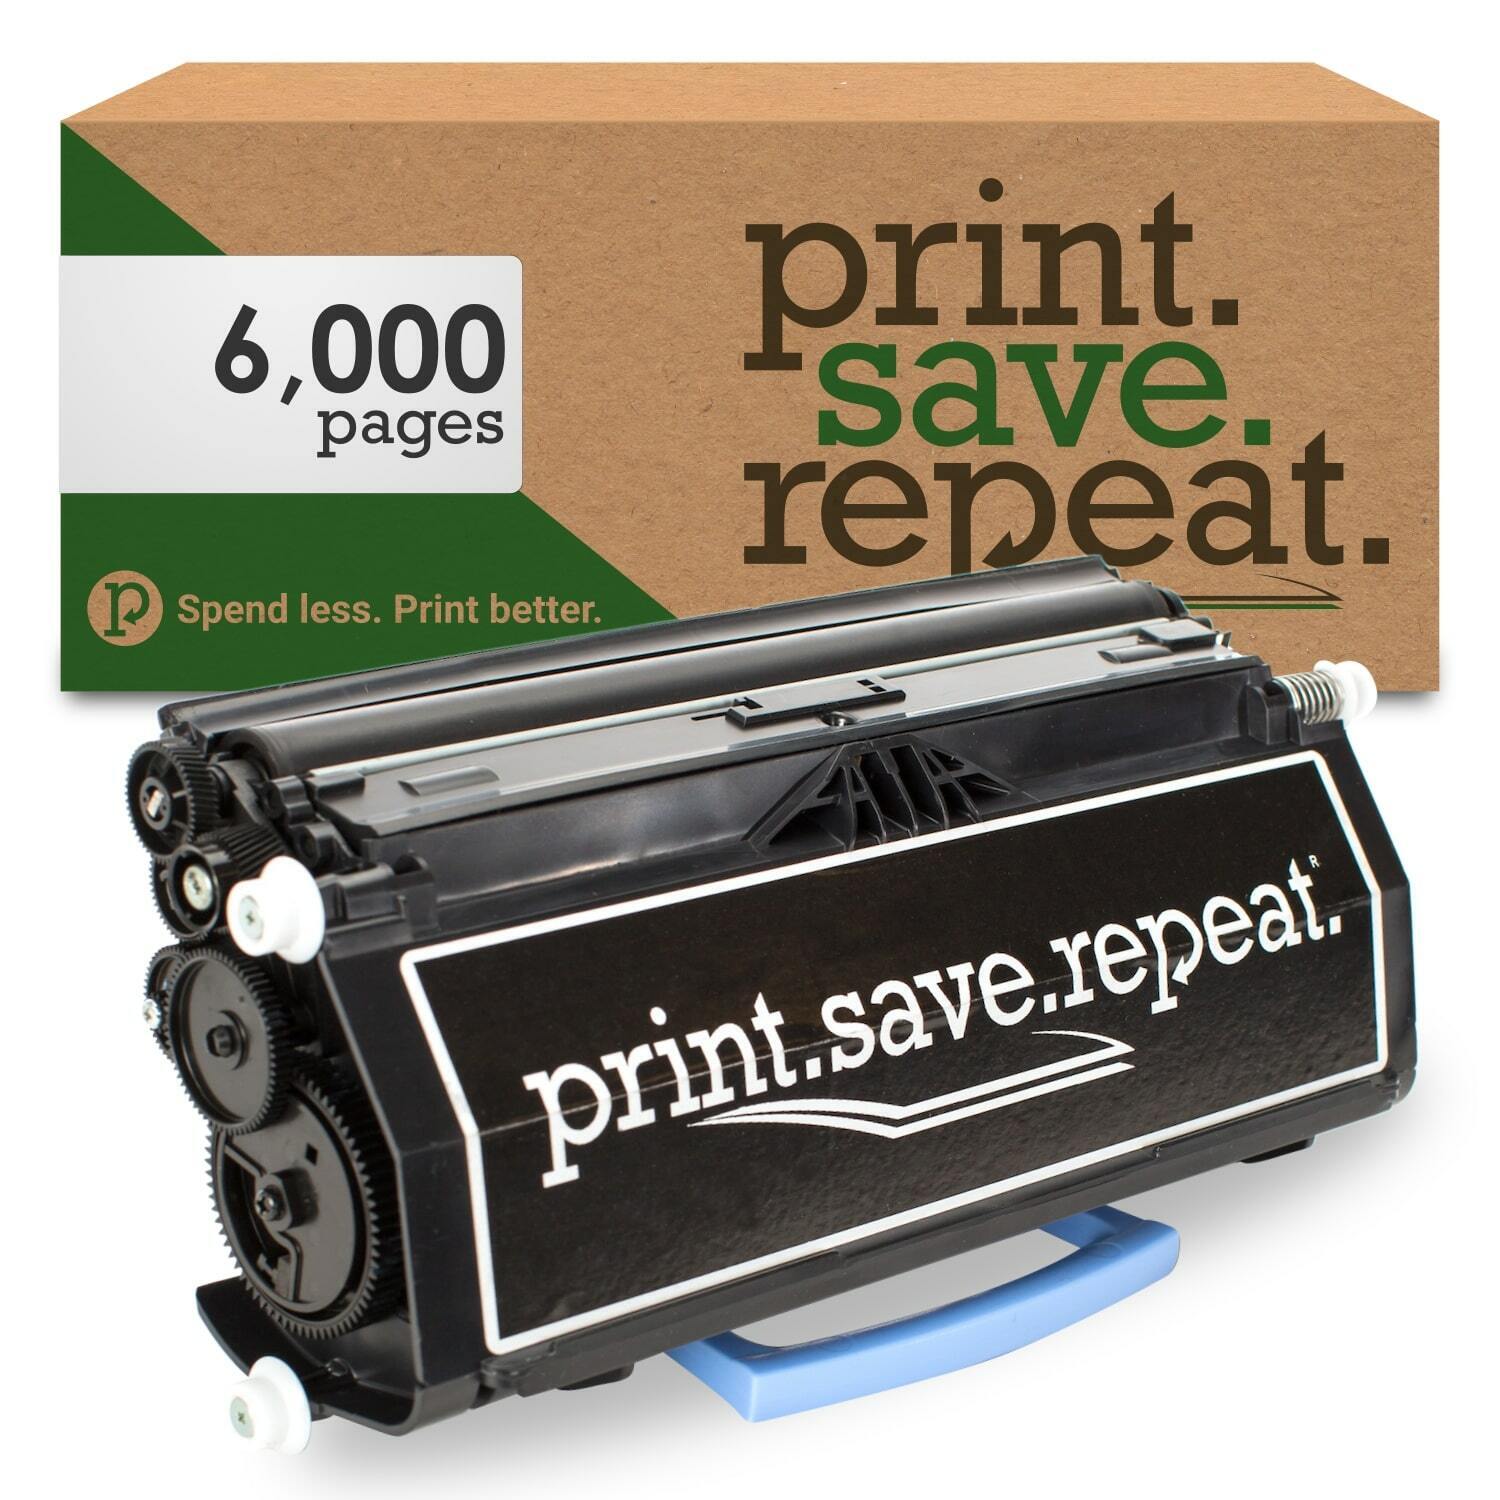 Print.Save.Repeat. Dell PK941 Toner Cartridge 2330, 2230dn, 2350, 2350dn [6K]